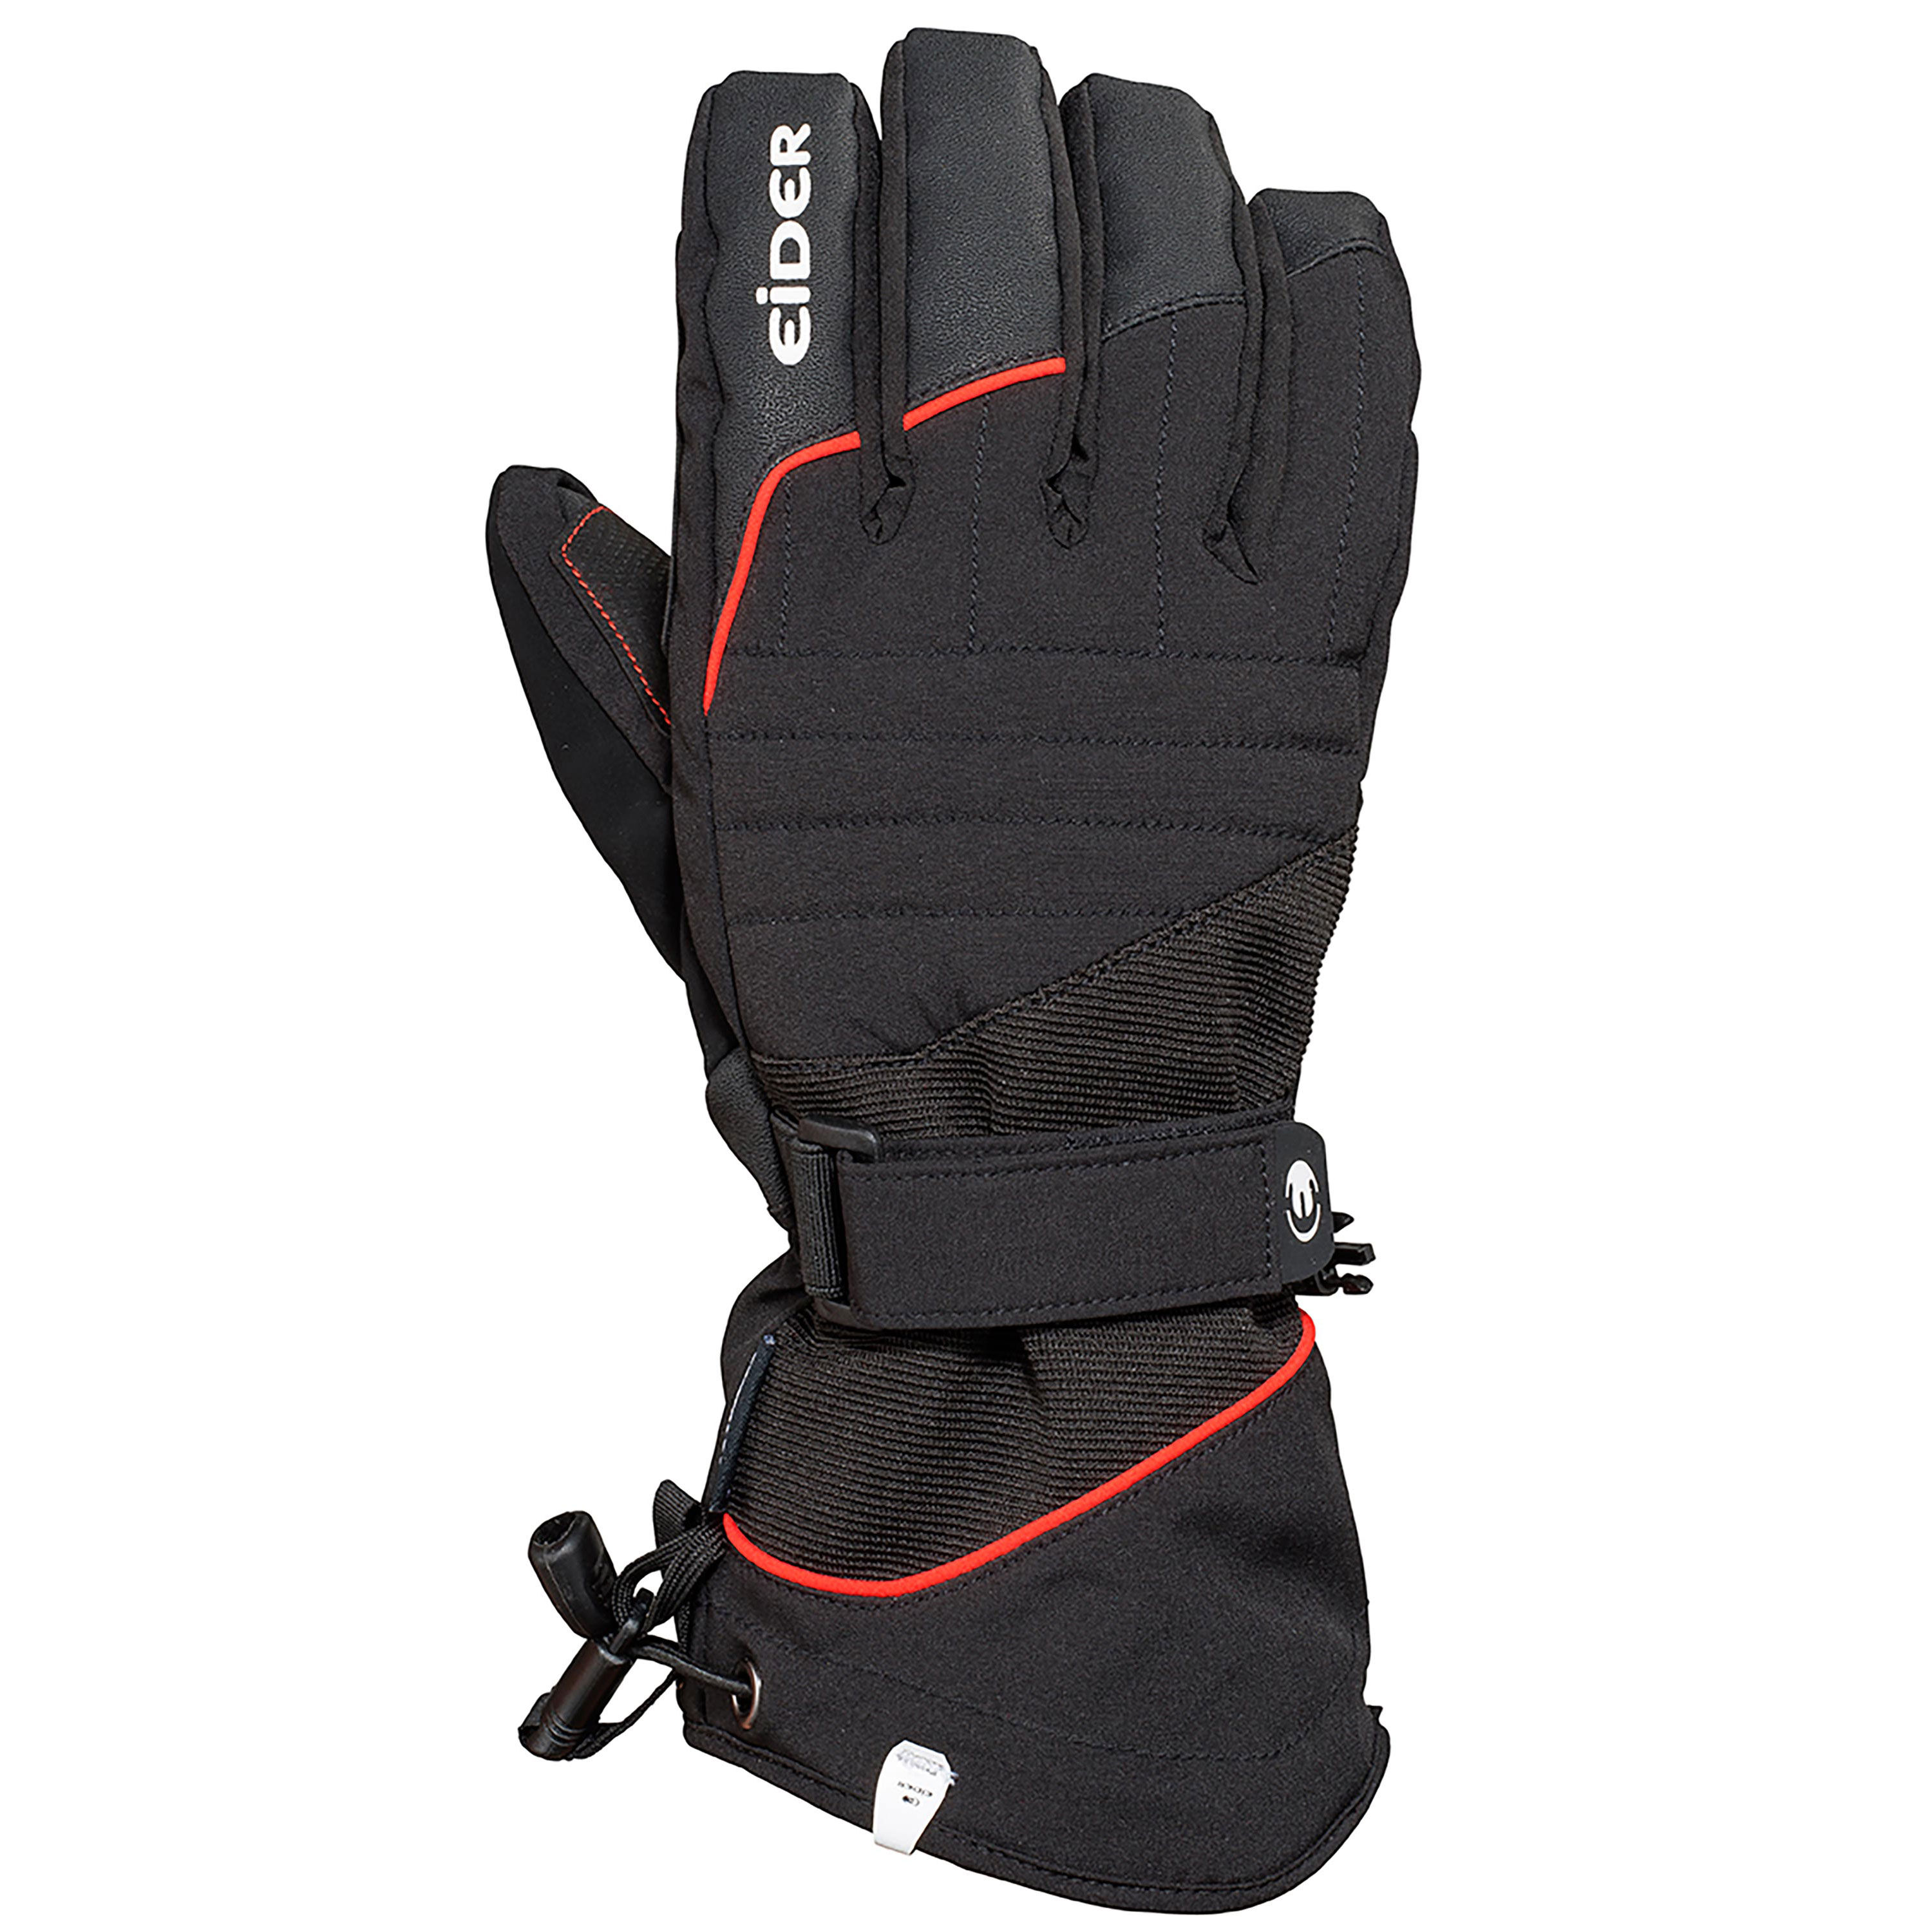 Eider - Blackcomb 4.0 - Gloves - Men's